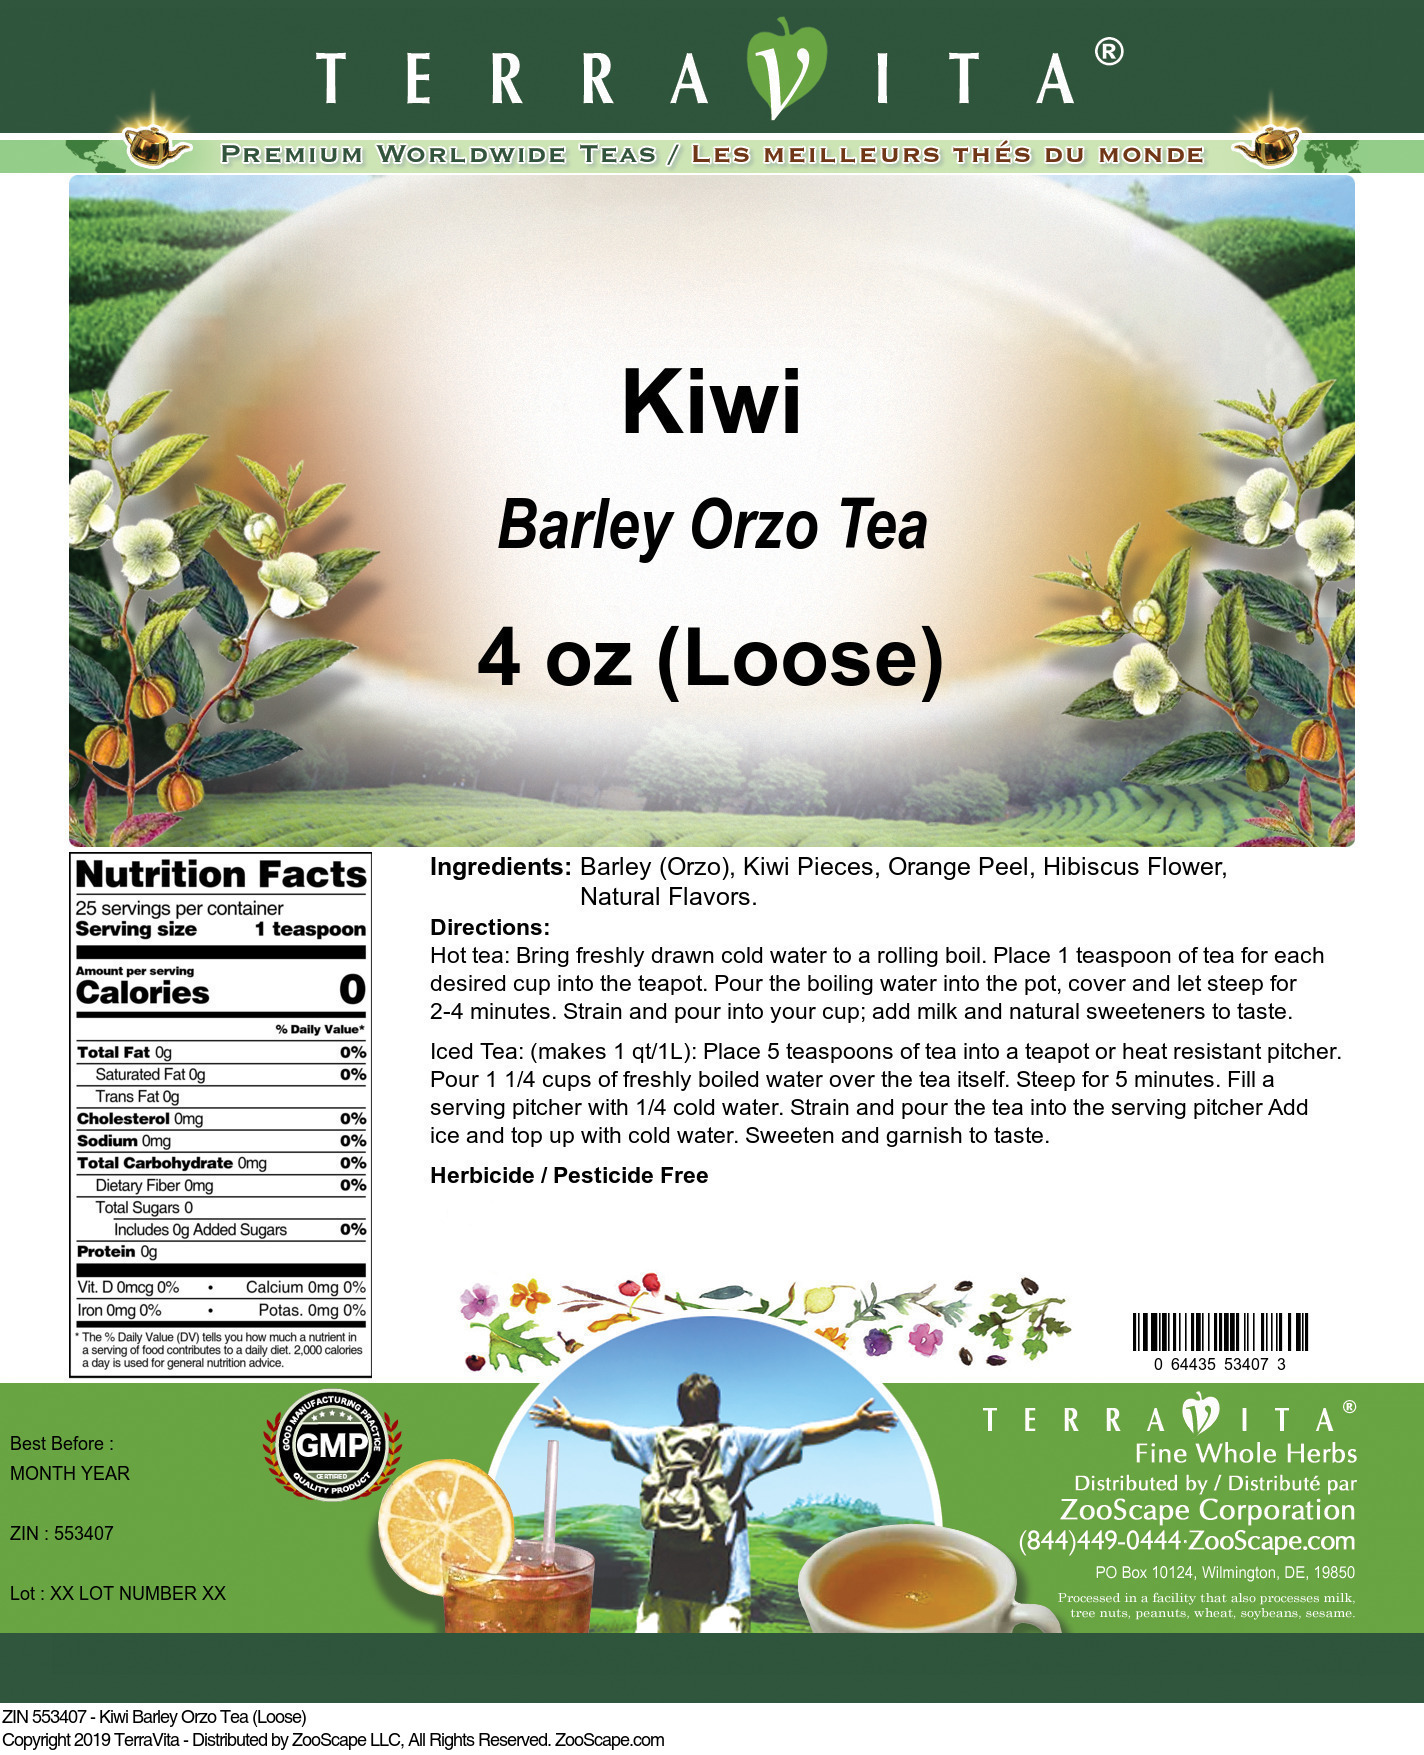 Kiwi Barley Orzo Tea (Loose) - Label